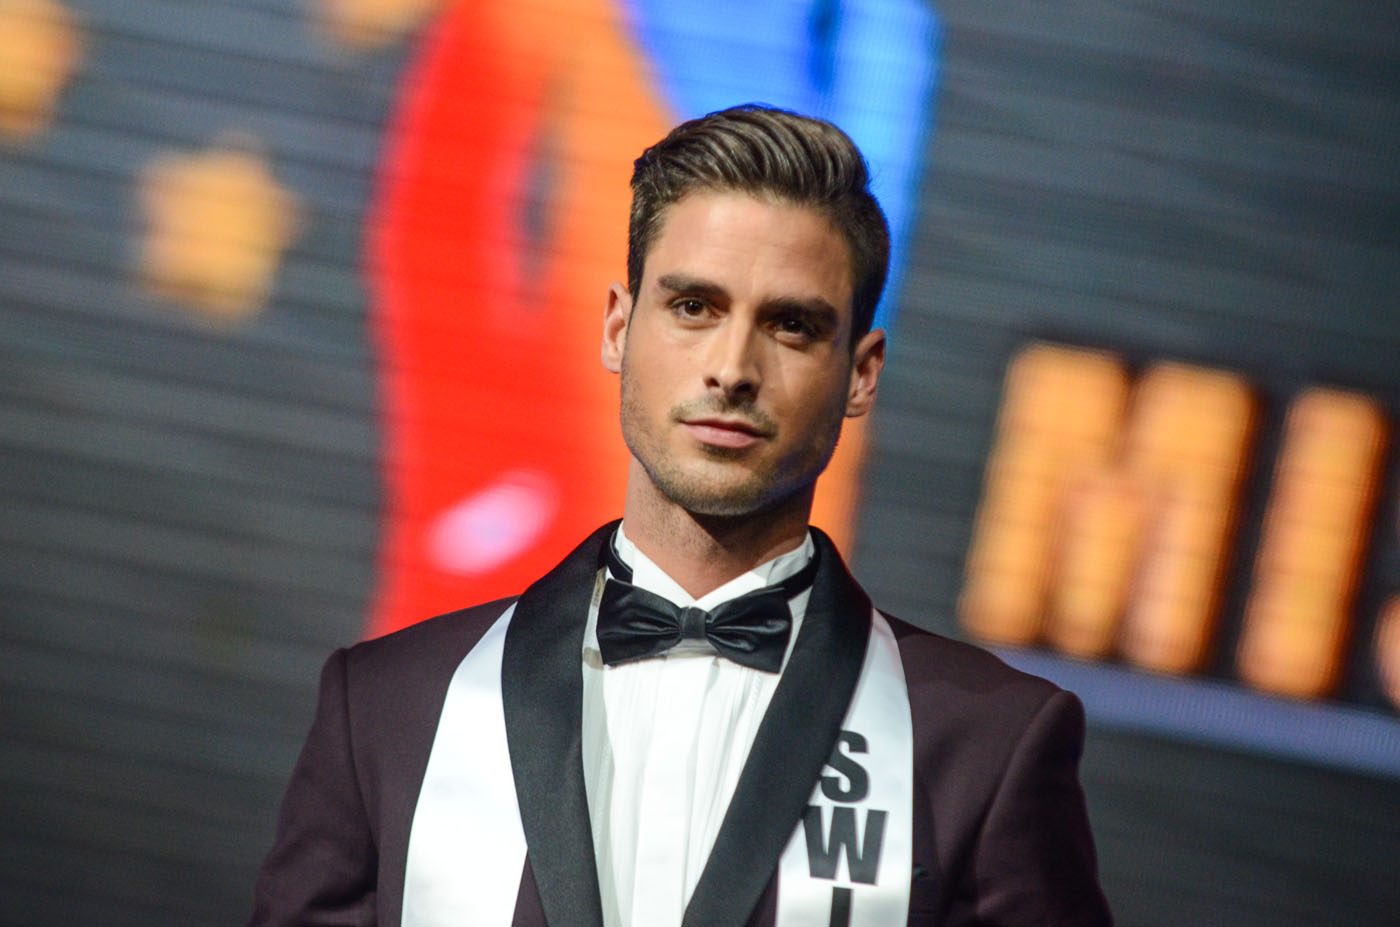 Switzerland’s Pedro Mendes wins Mister International 2015 pageant